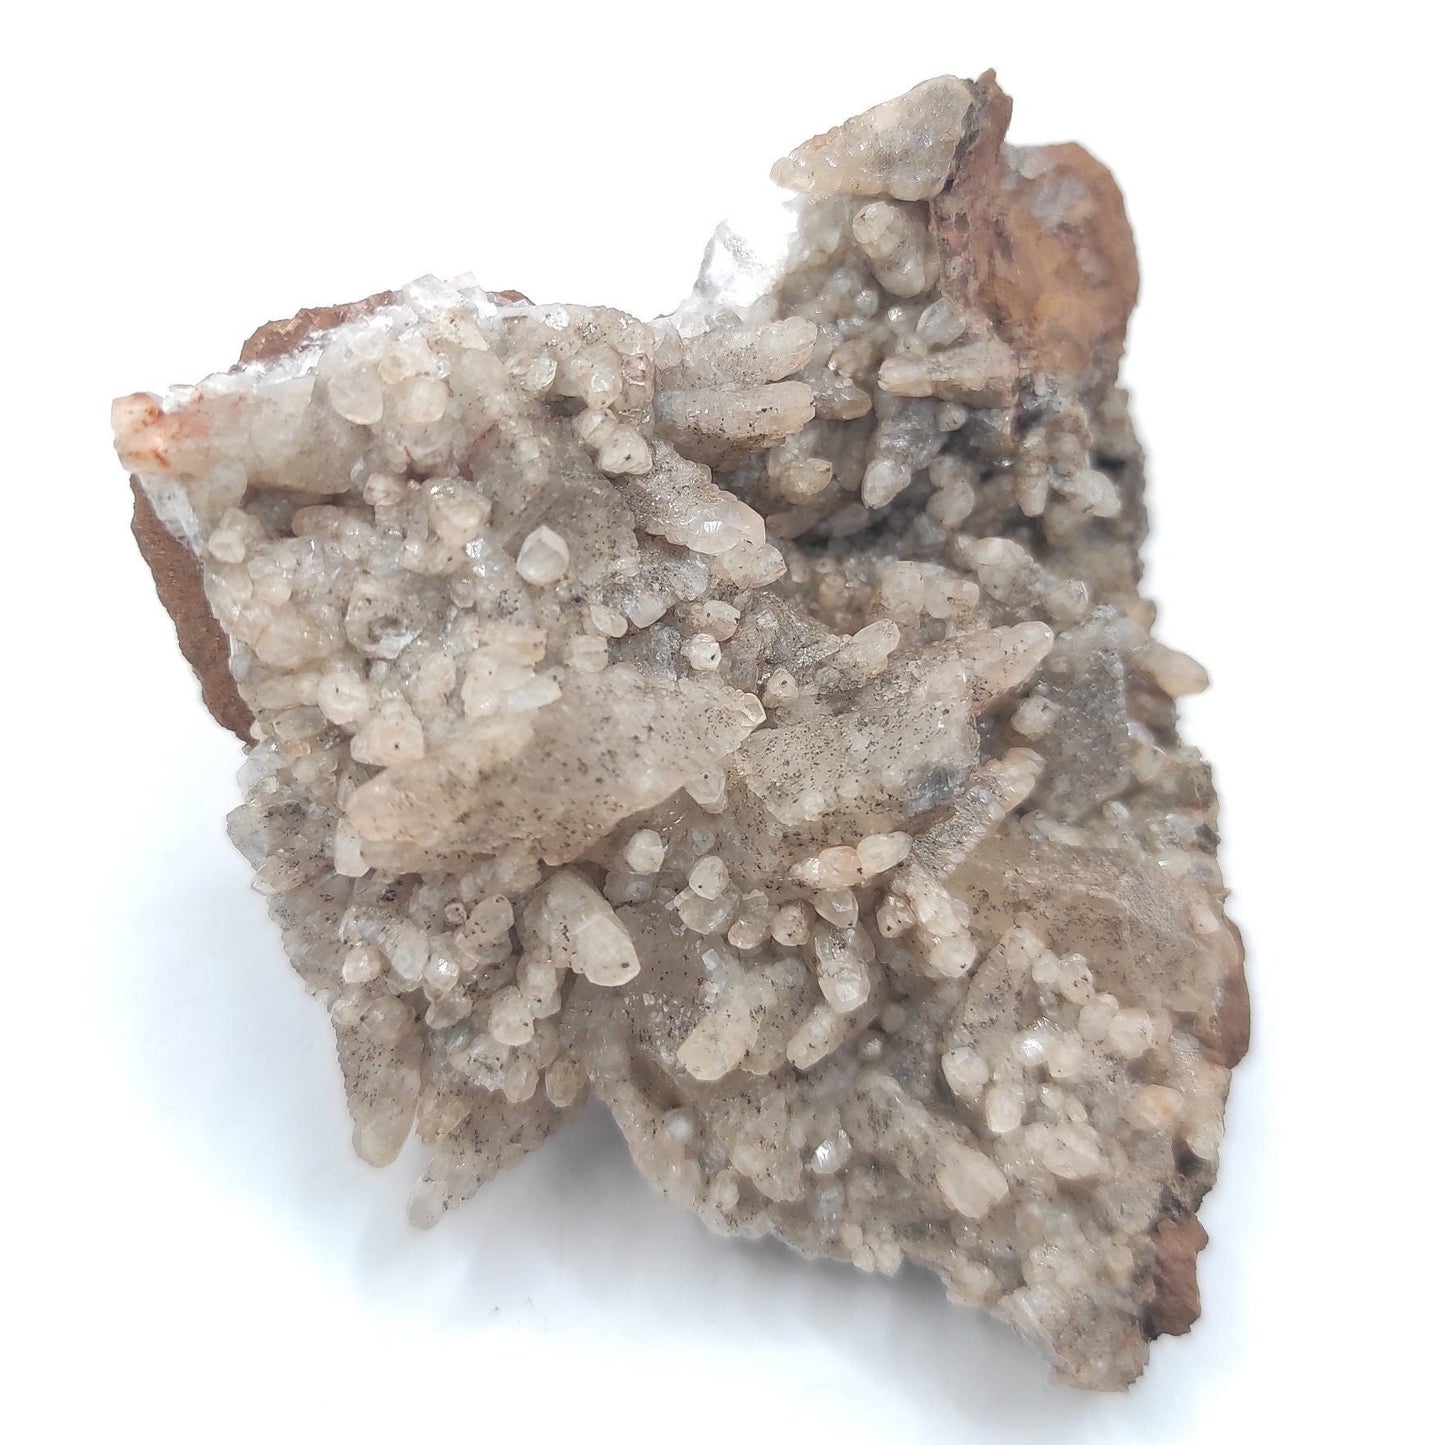 105g UV Reactive Calcite - Phosphorescent Calcite Specimen - Cambridge Cove, Nova Scotia, Canada - UV Minerals - Minerals with Afterglow